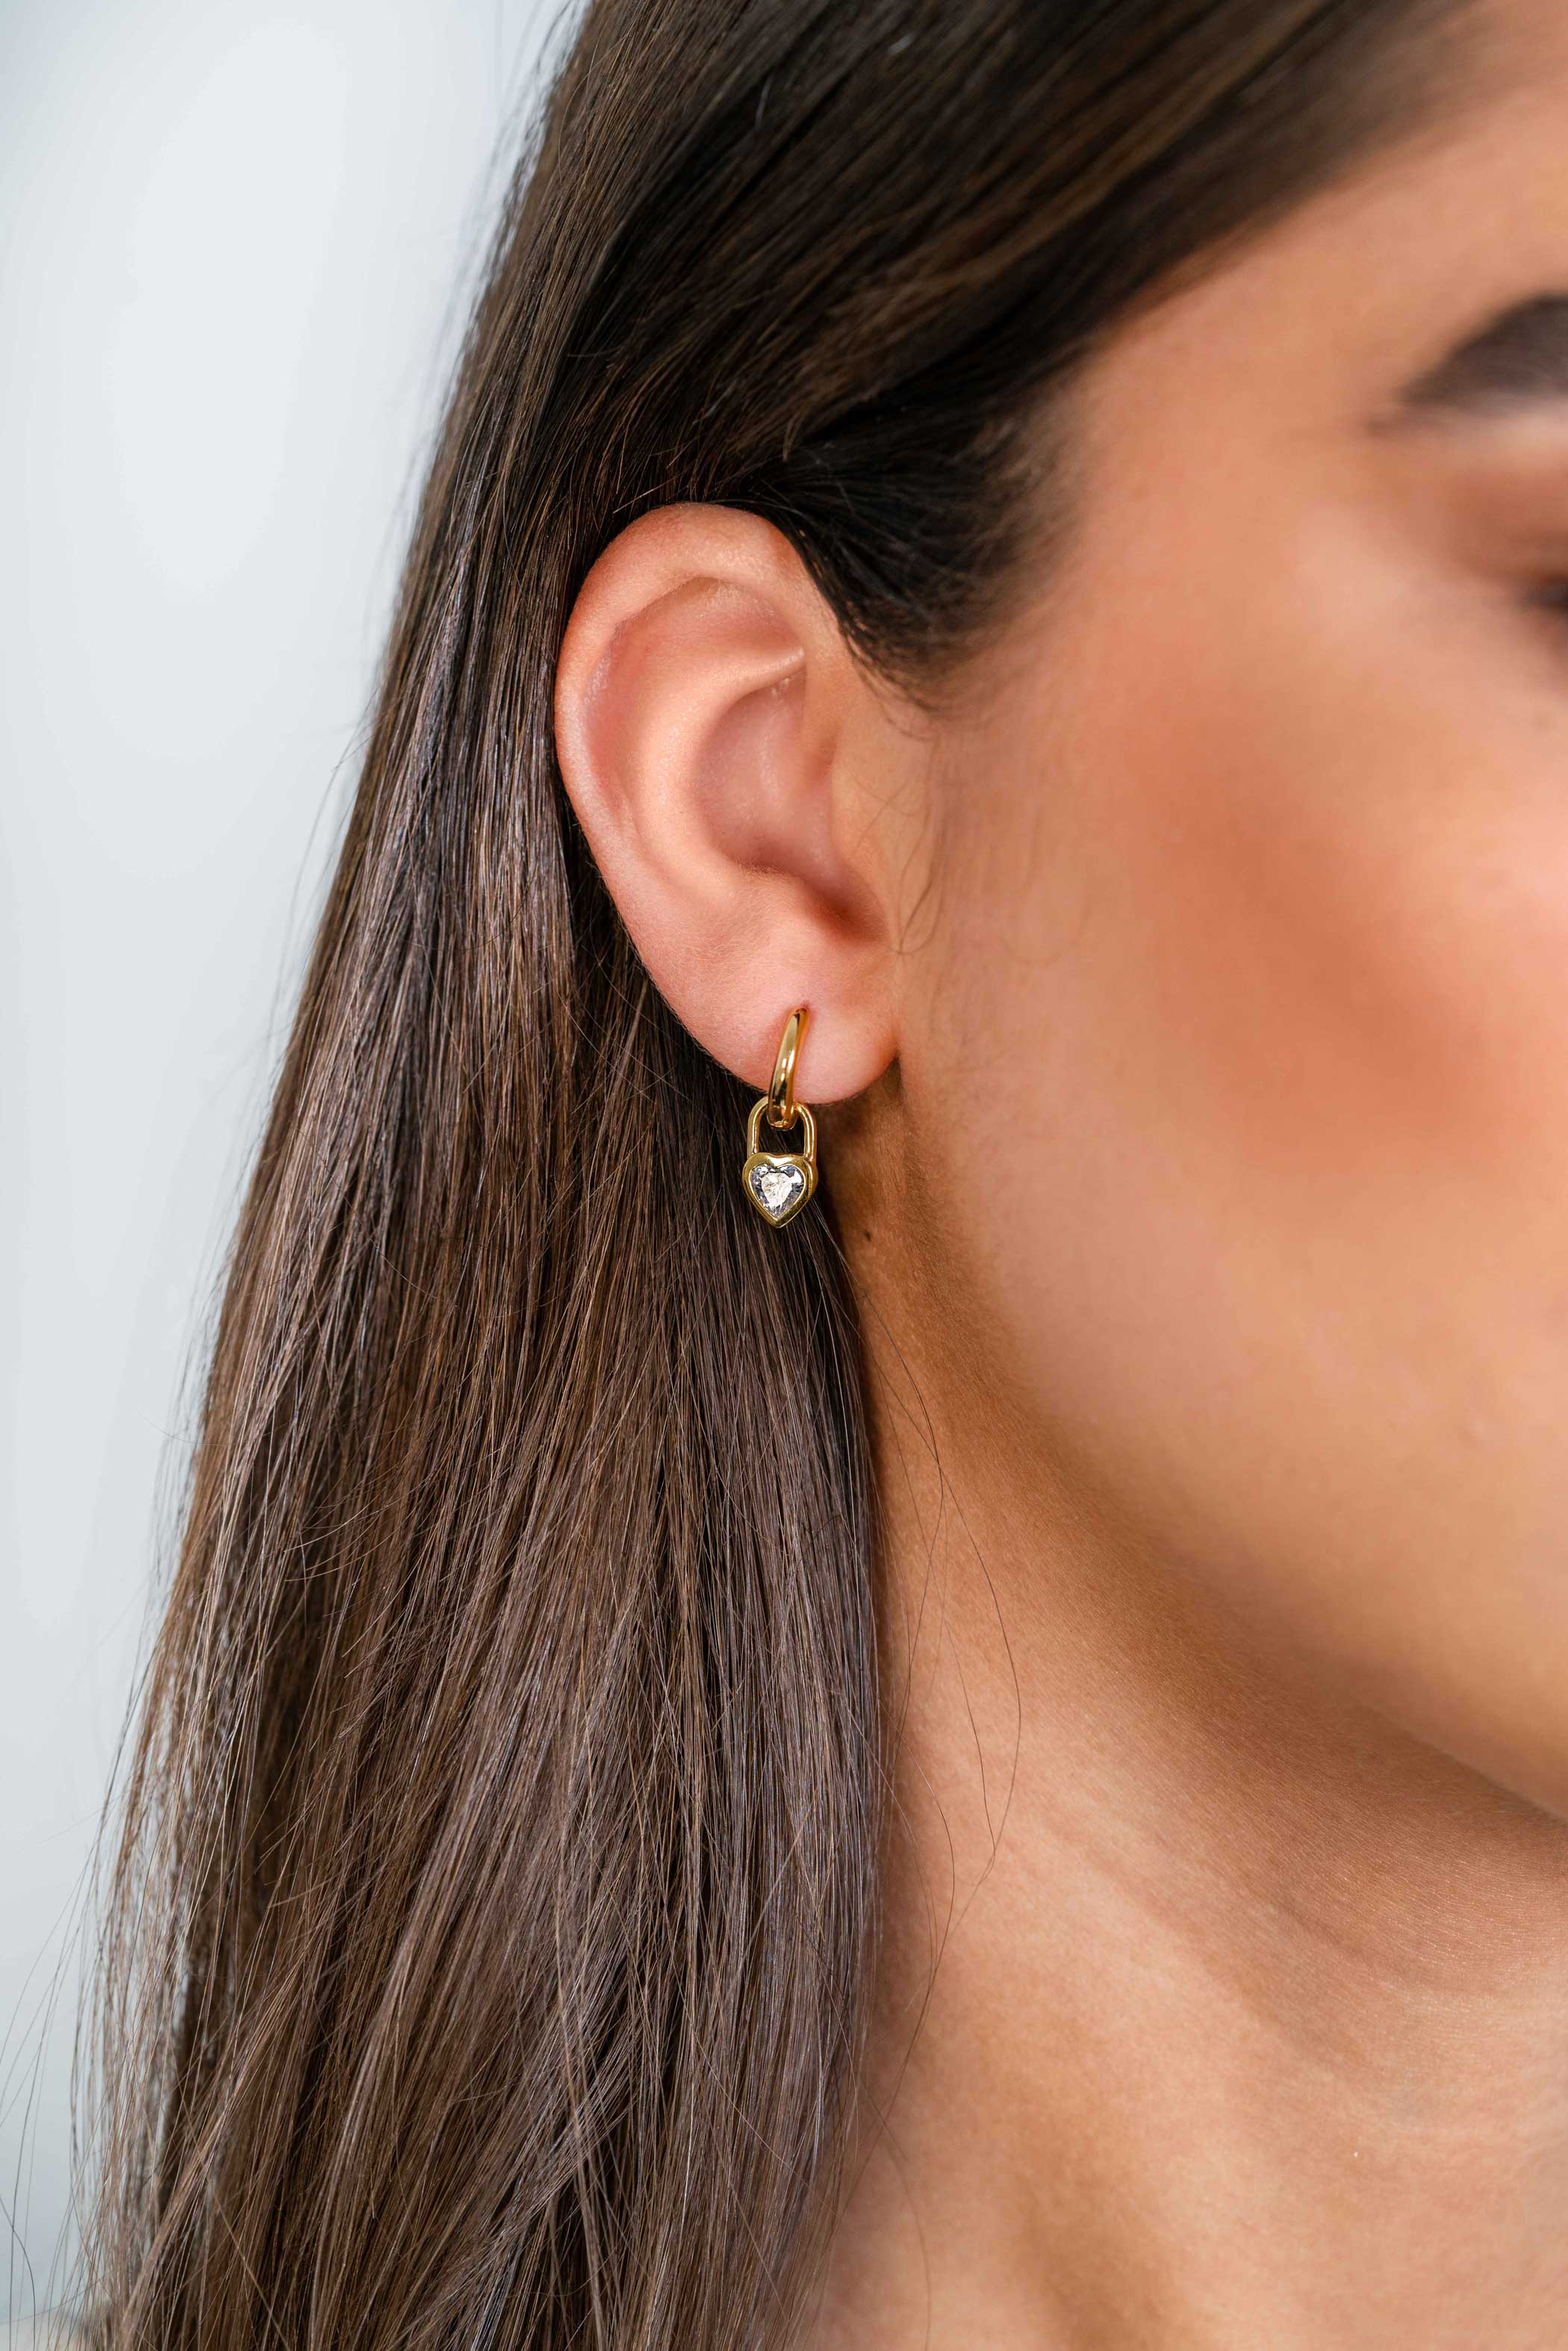 12mm ZINZI Gold Plated Sterling Silver Earrings Pendants Heart with White Zirconia ZICH2306 (excl. hoop earrings)